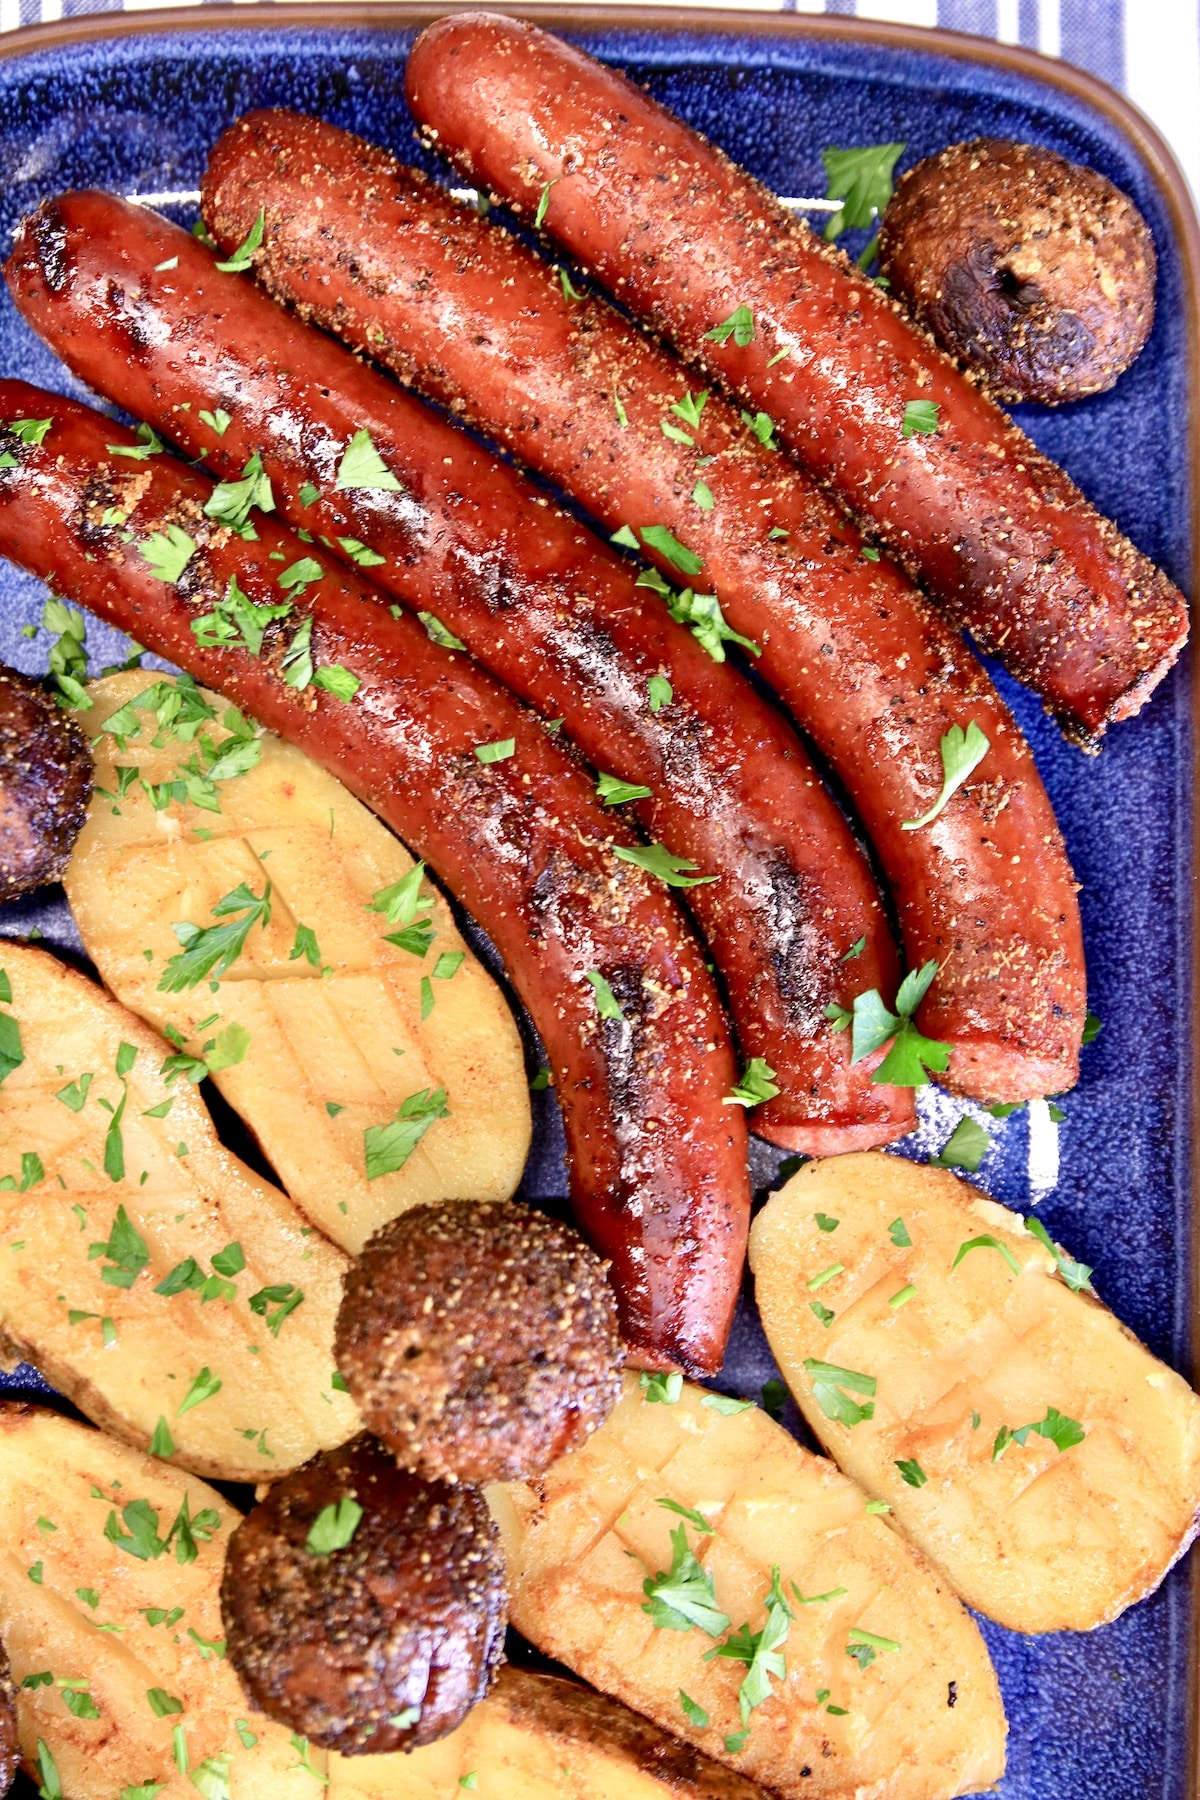 Grilled Smoked Sausage, potatoes and mushrooms.